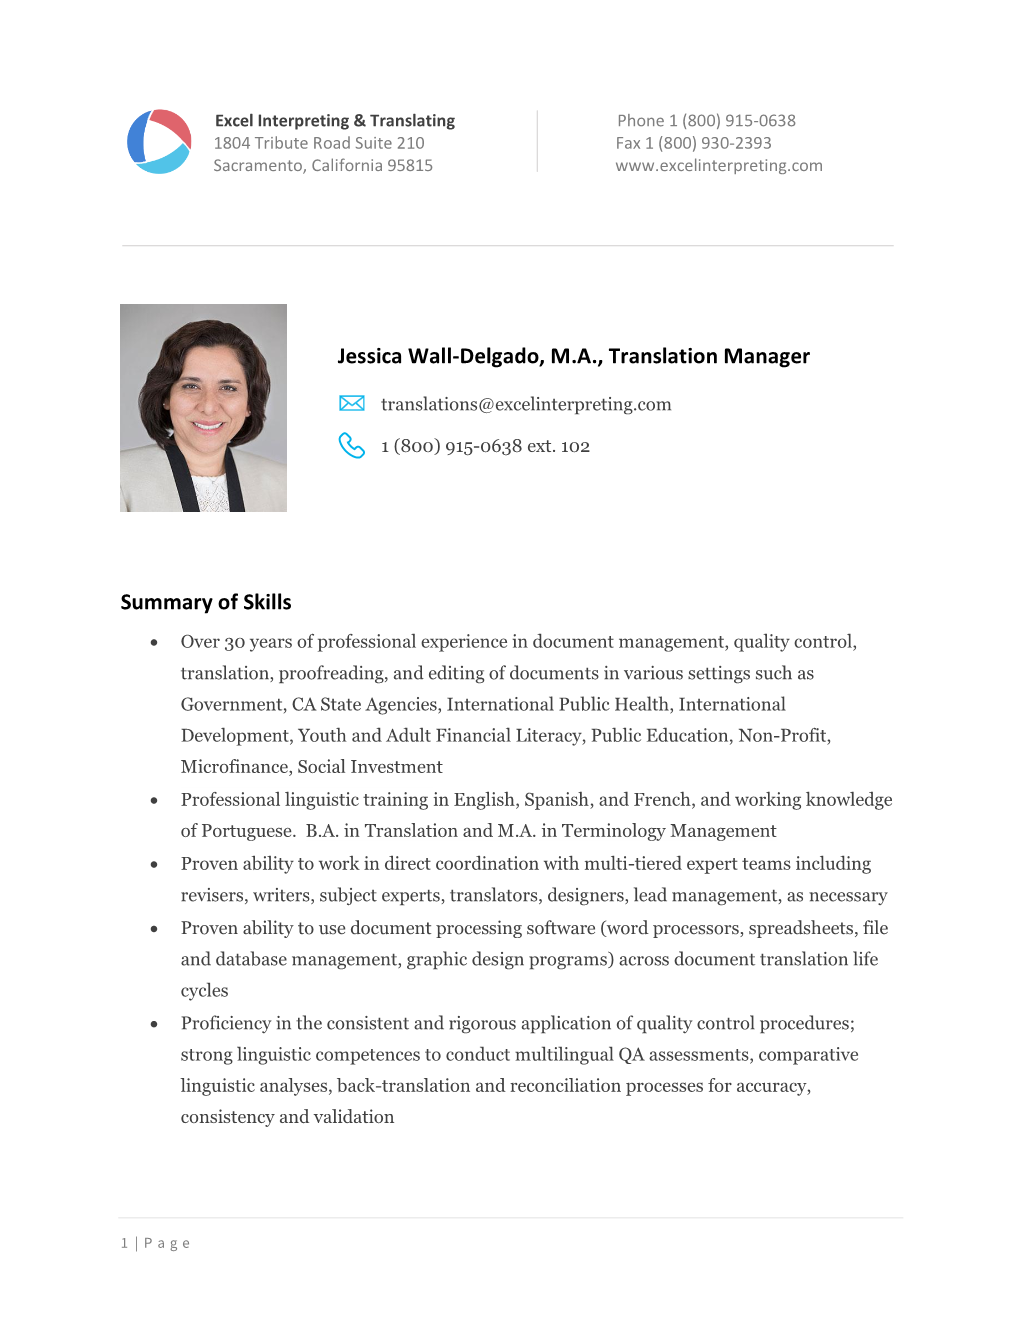 Jessica Wall-Delgado, M.A., Translation Manager Summary of Skills